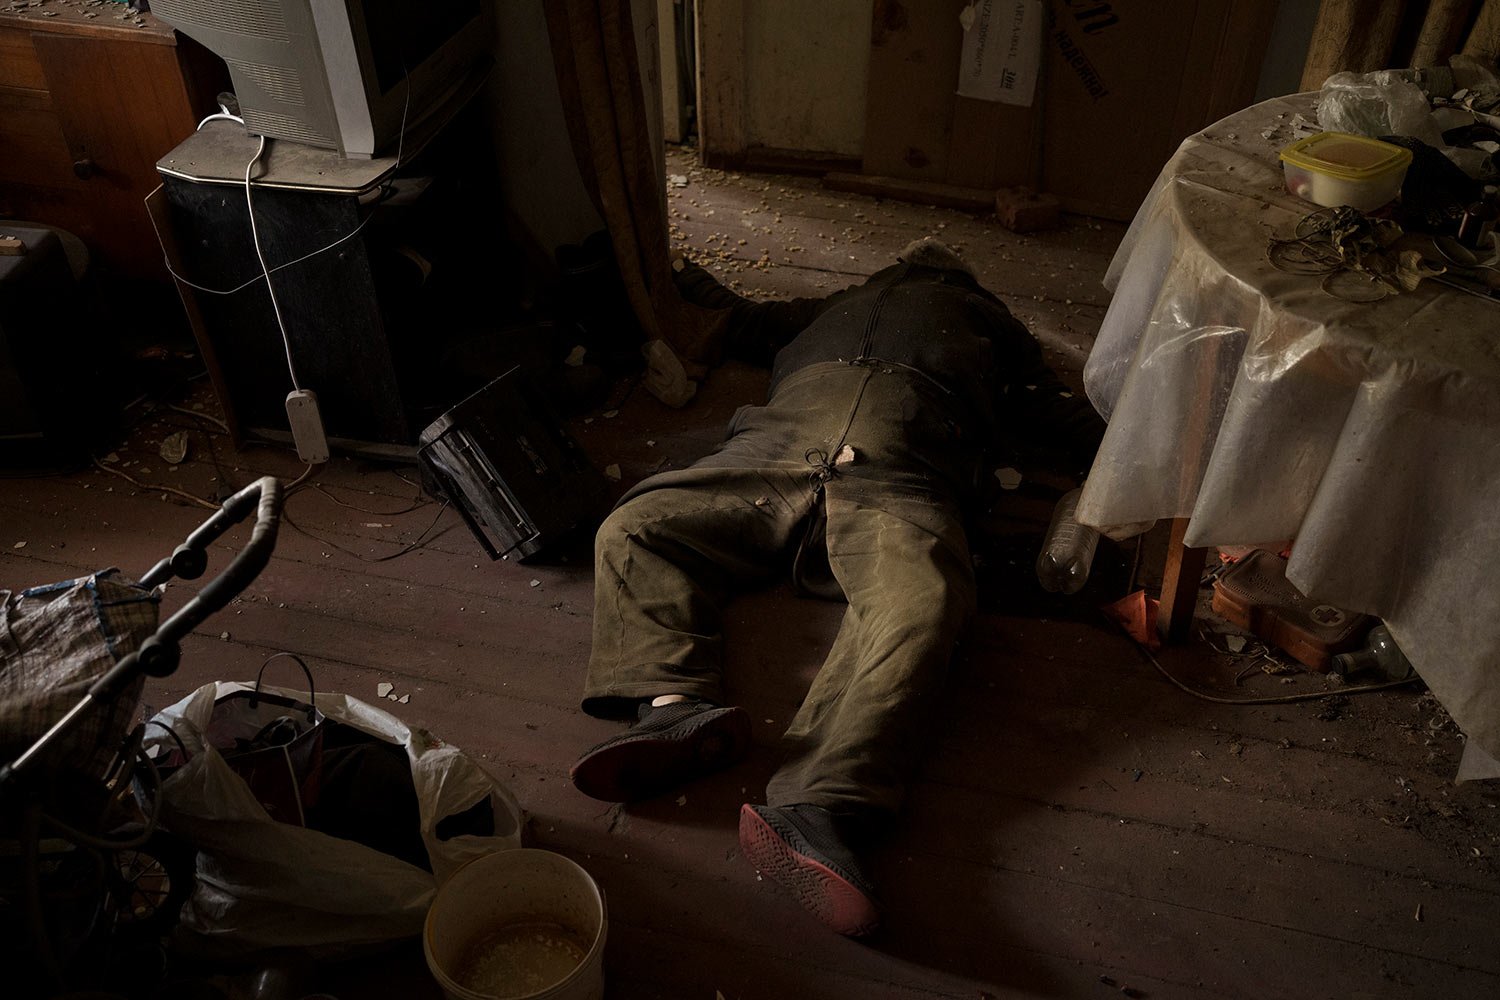  The body of a man lies in an apartment as Russian bombardments continue in a village recently retaken by Ukrainian forces near Kharkiv, Ukraine, Saturday, April 30, 2022. (AP Photo/Felipe Dana) 